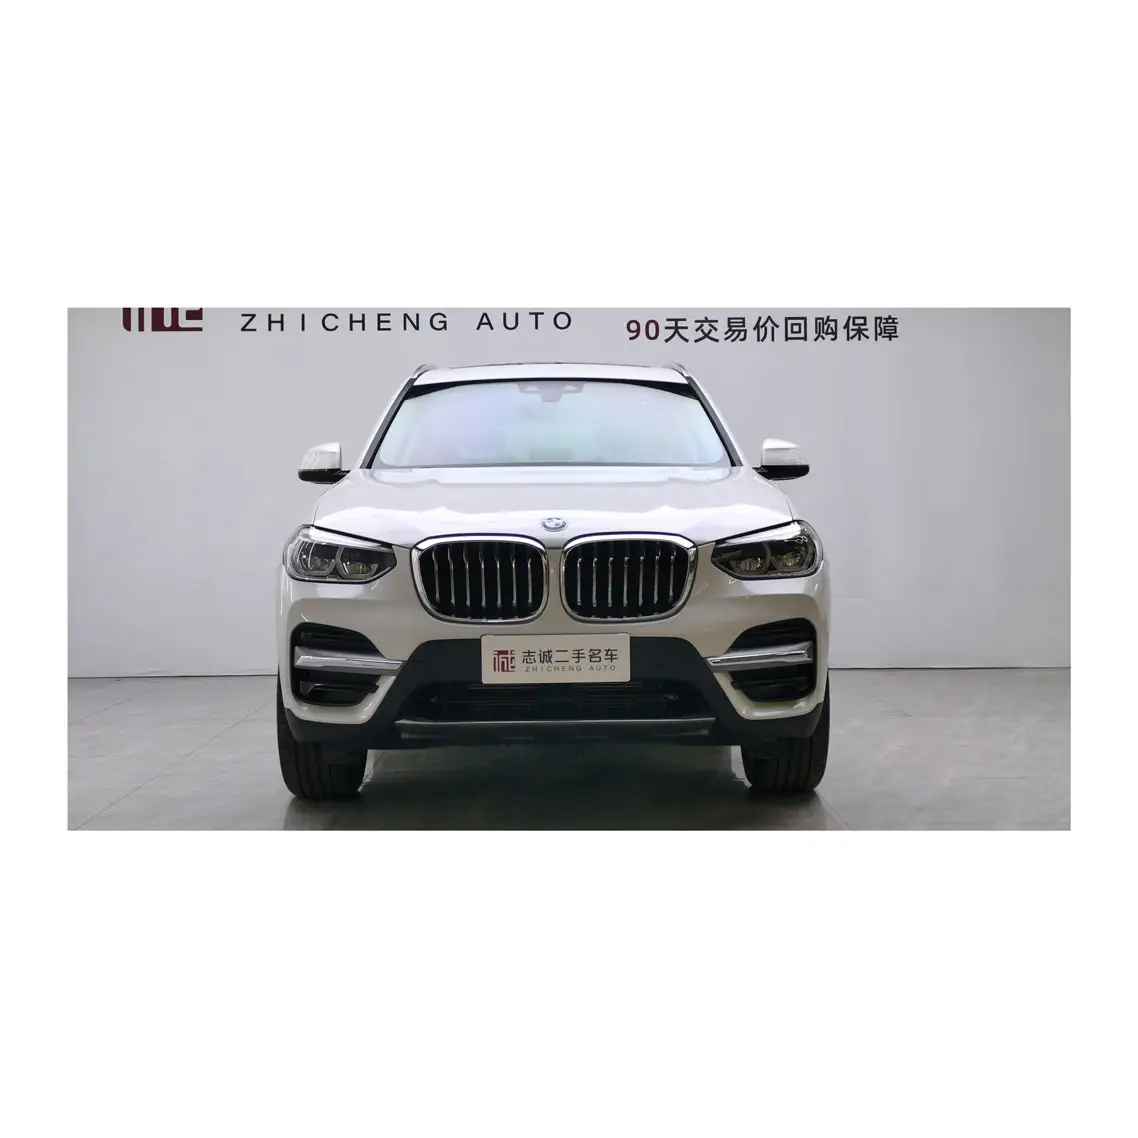 BMW X3 SUV ikinci el araba lüks Suv Bmw X3 2021 ikinci el araba sıcak satış spor Automatic otomatik (mevduat)